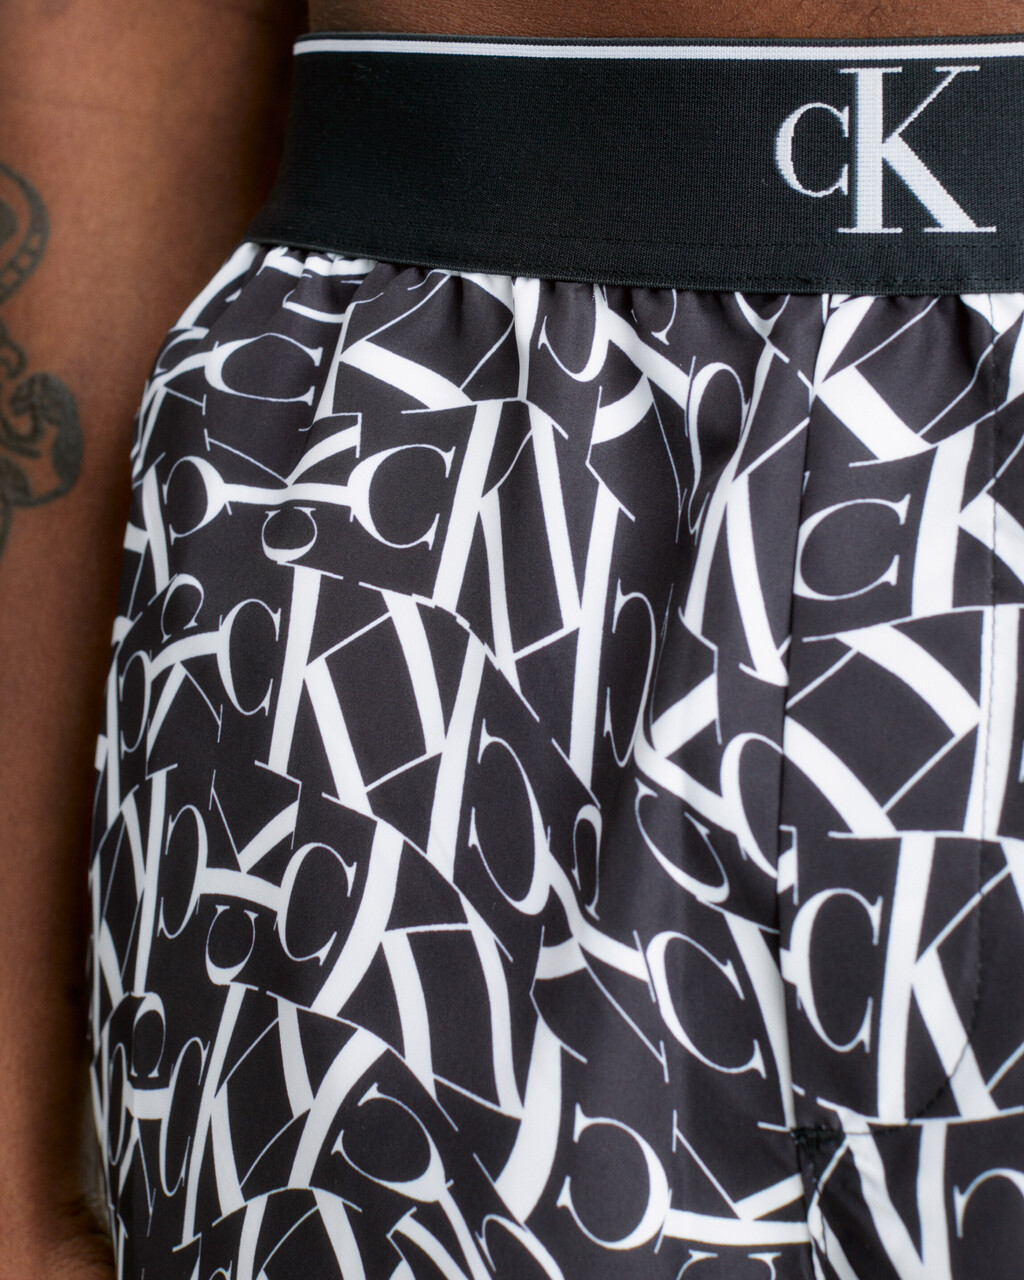 CK Monogram Board Shorts, black